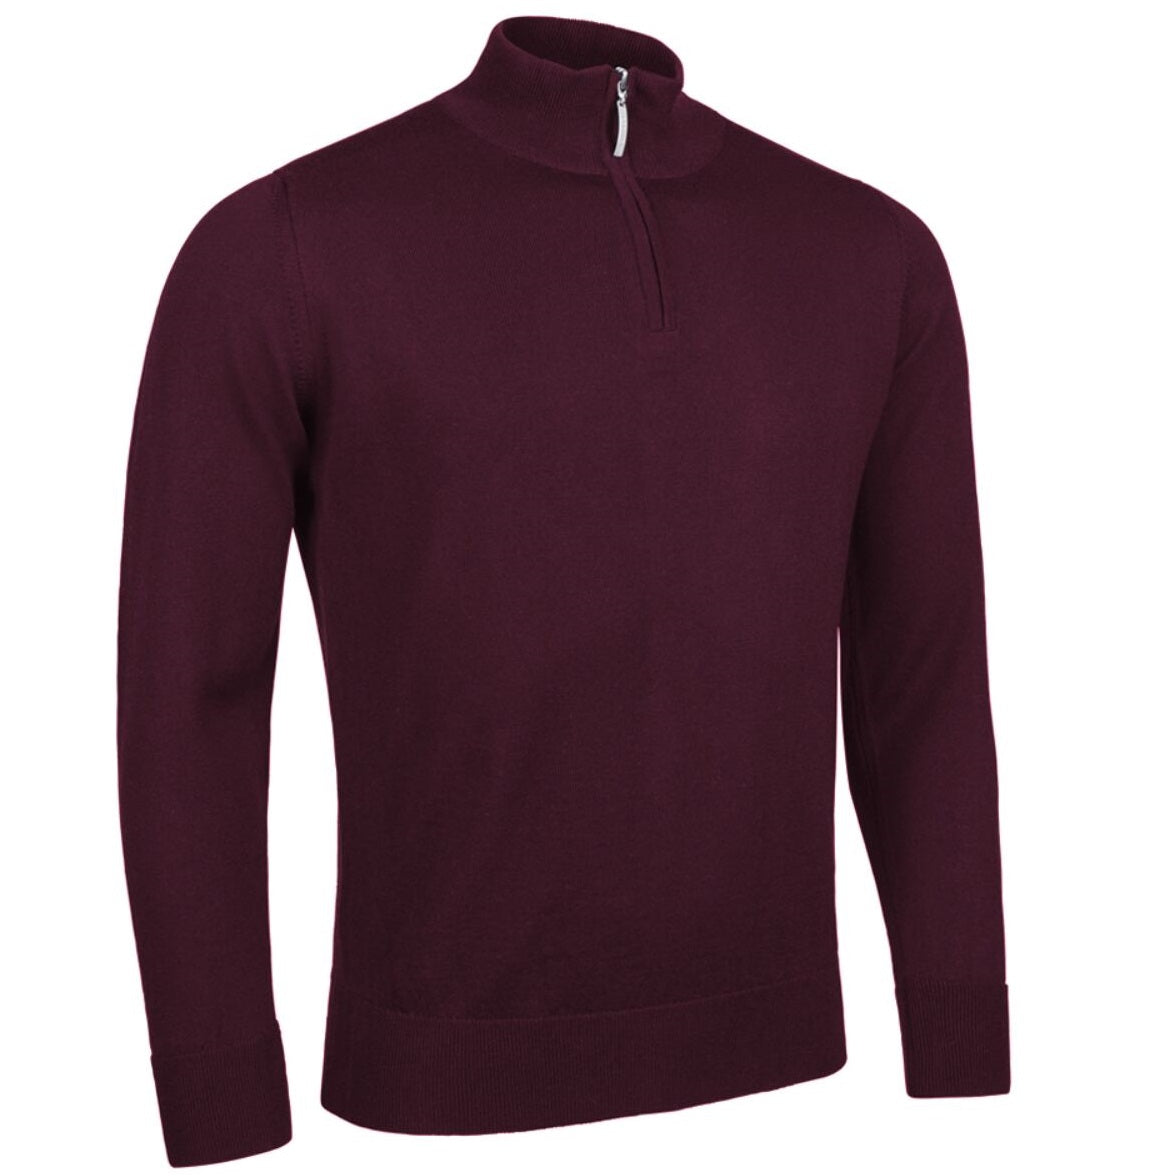 GLENMUIR Jasper Quarter Zip Merino Wool Sweater - Mens - Bordeaux